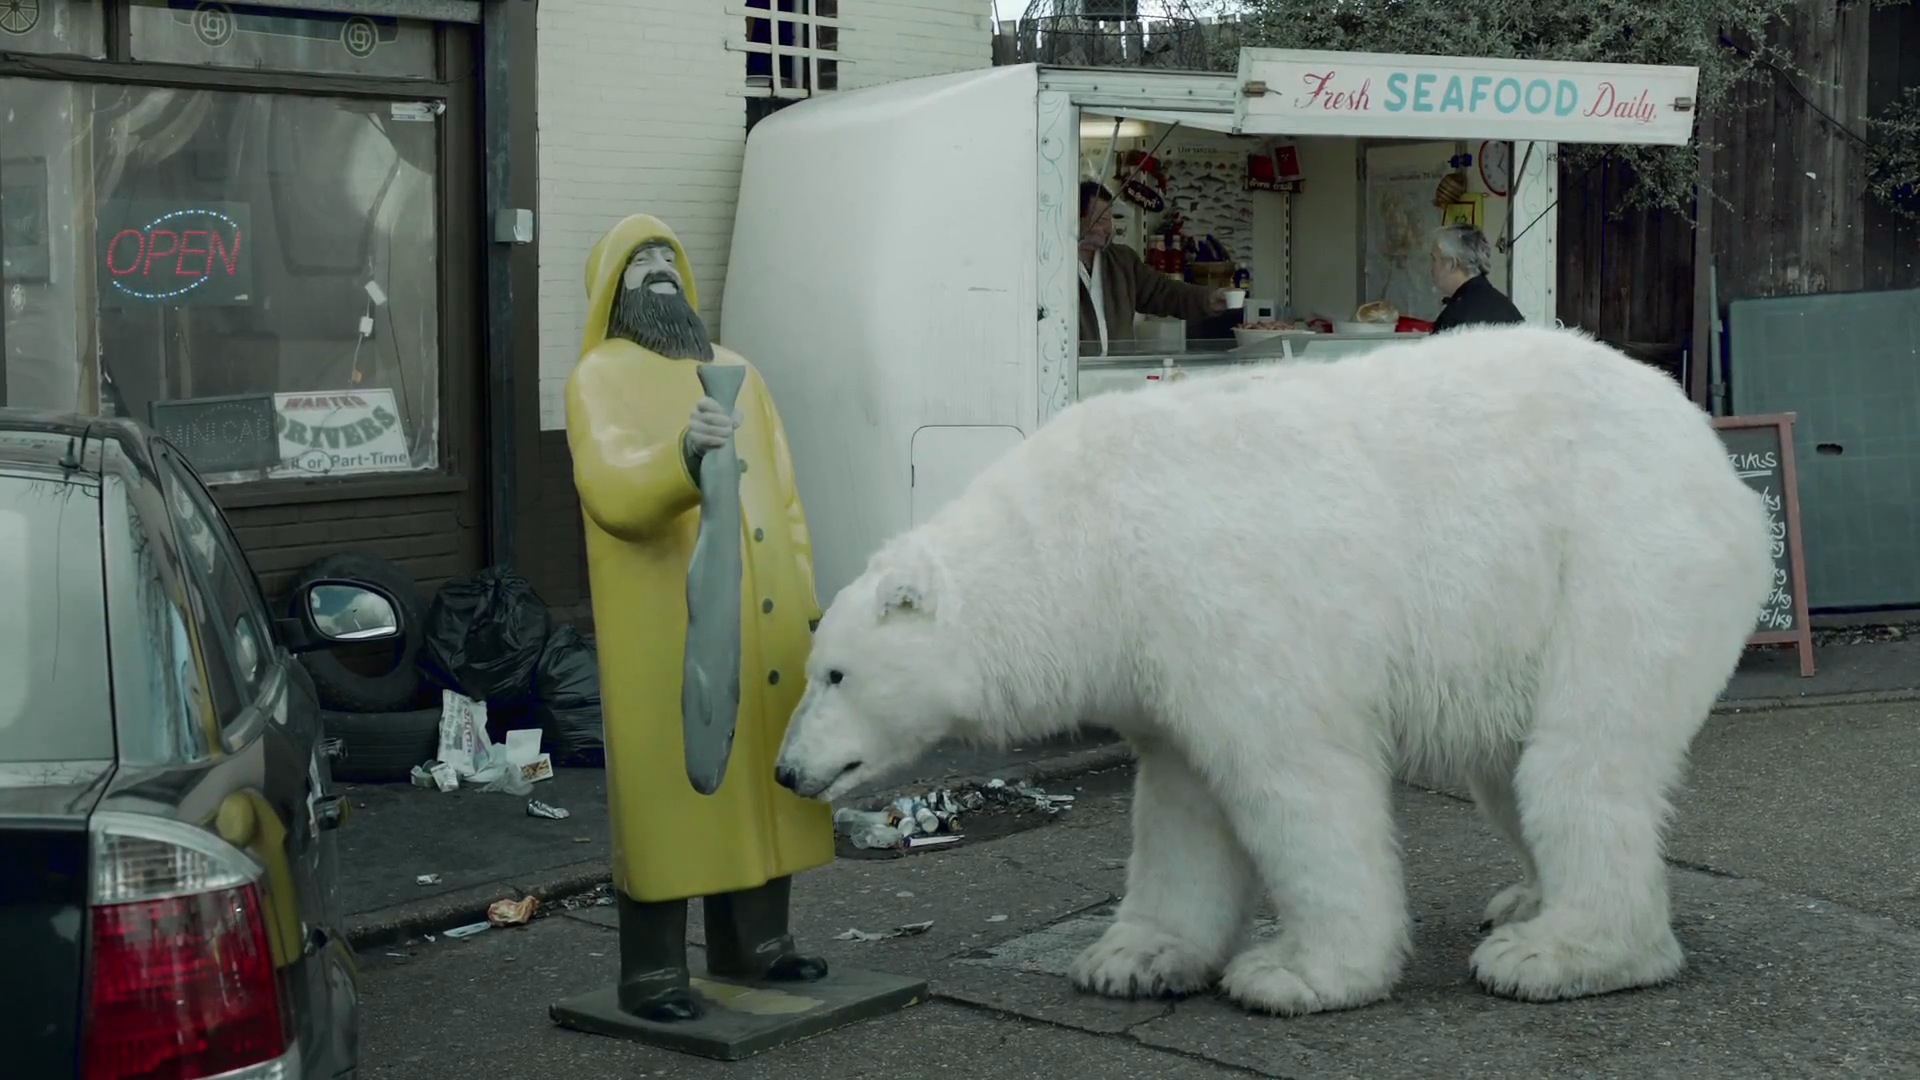 Greenpeace - Homeless Polar Bear7